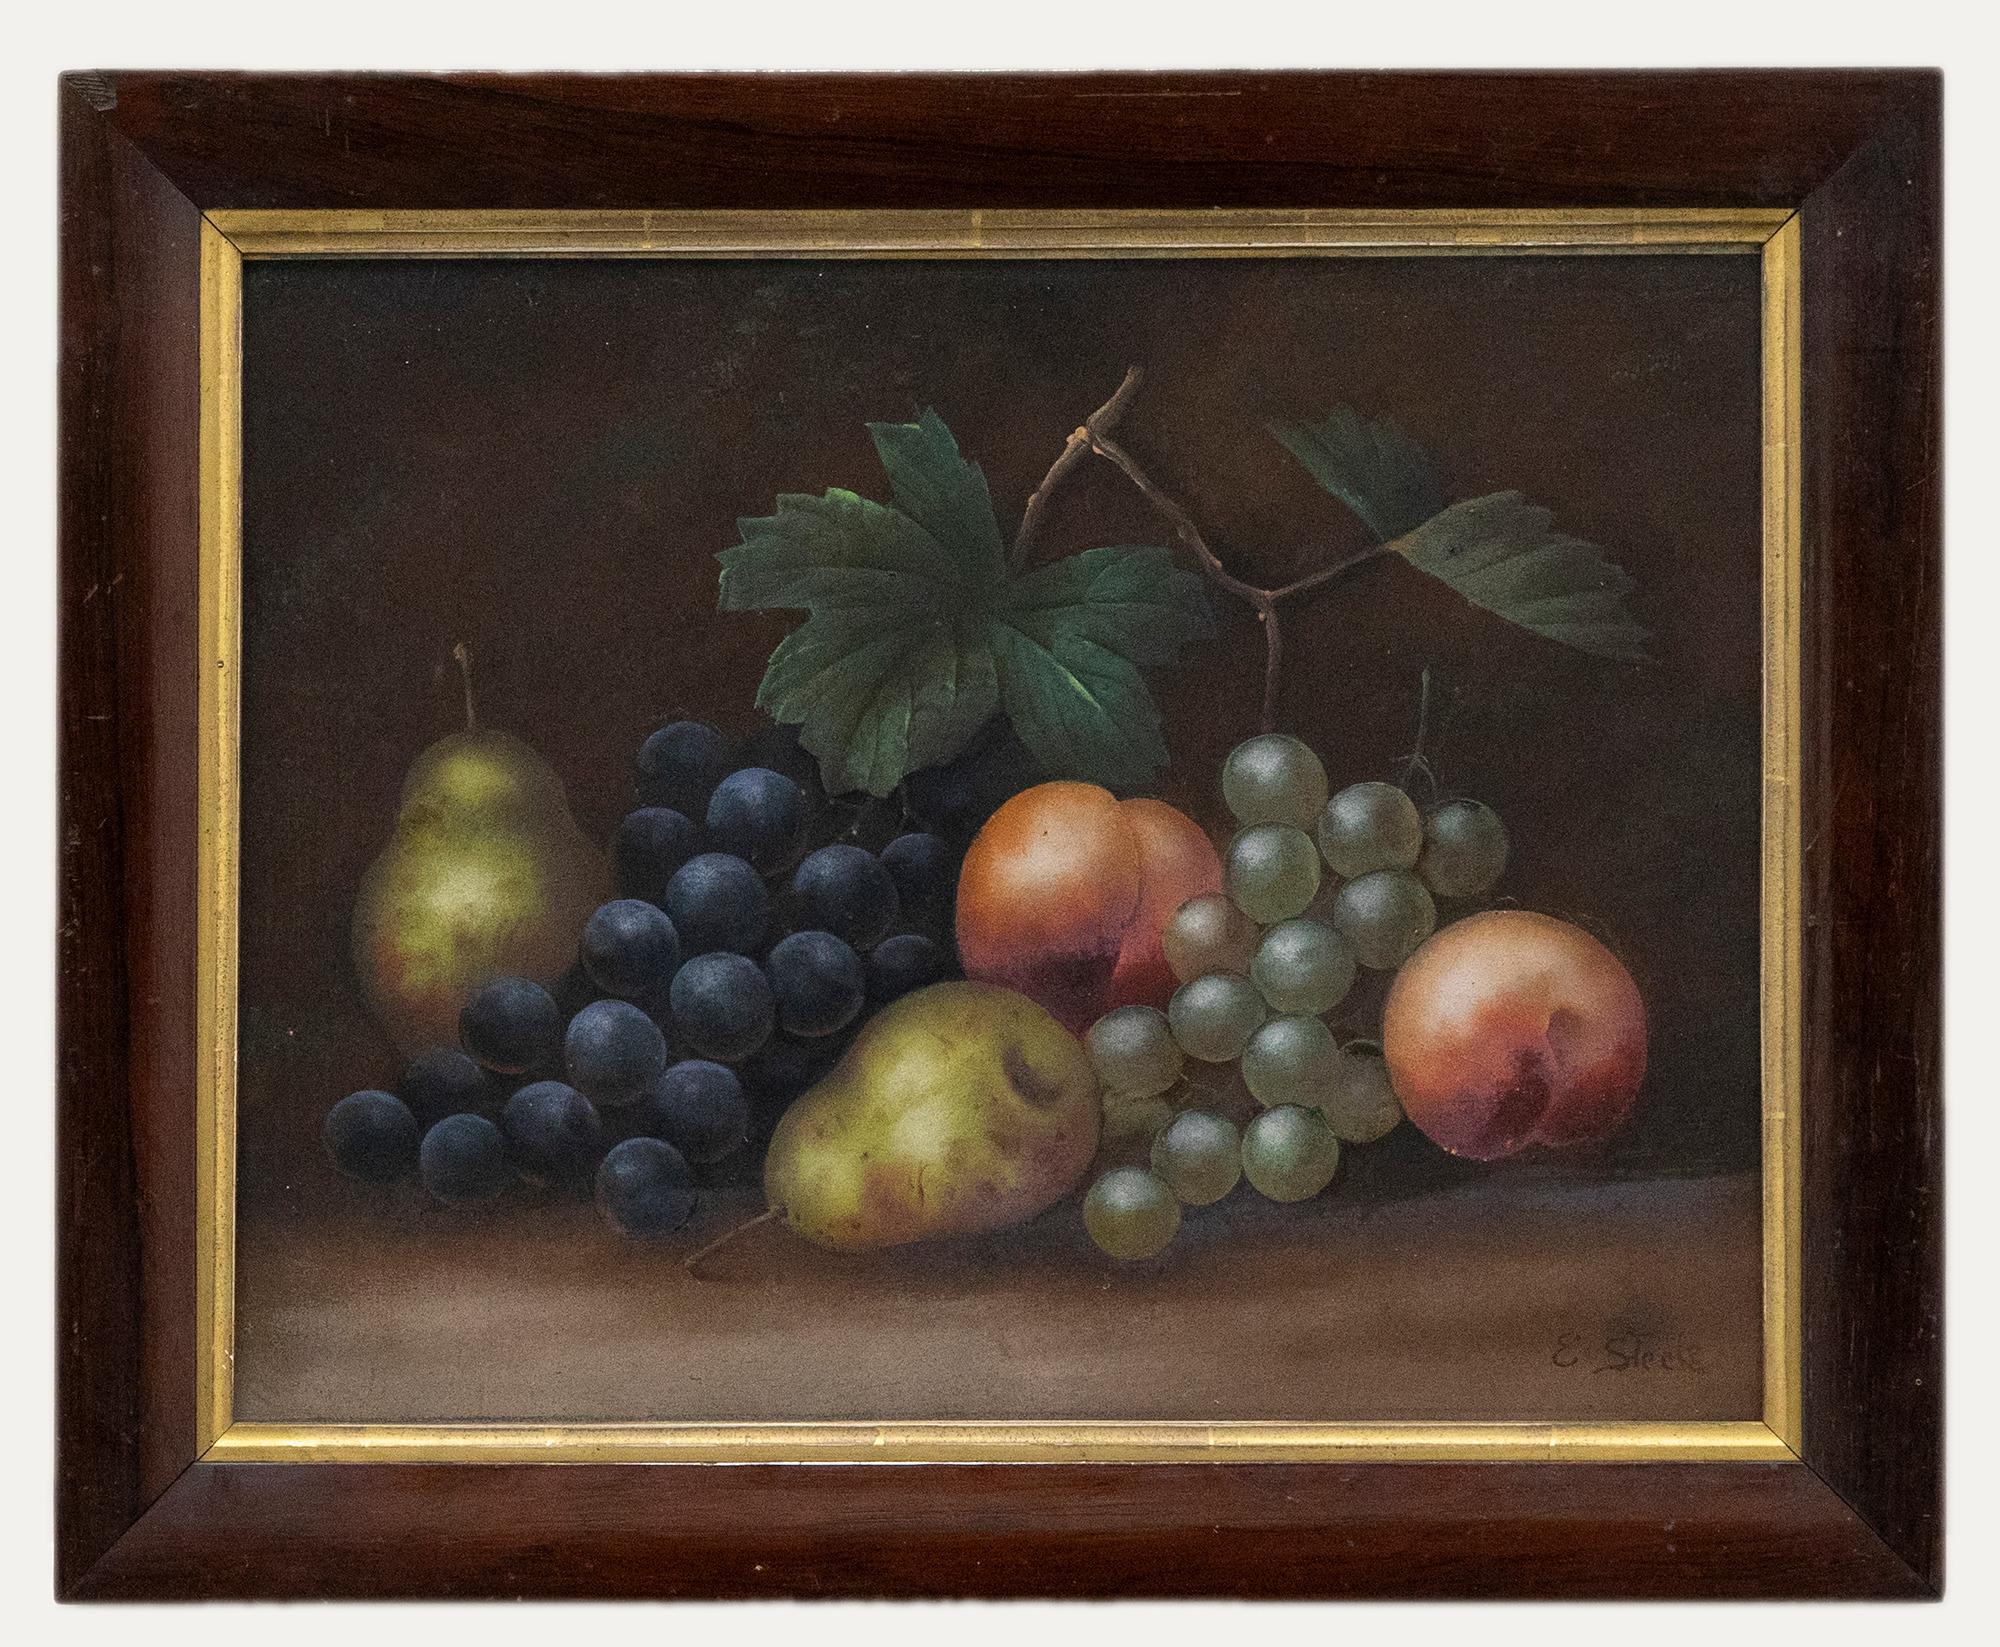 Unknown Still-Life Painting – Edwin Steele (1839-1919) – Ölgemälde, Stillleben mit Früchten, spätes 19. Jahrhundert